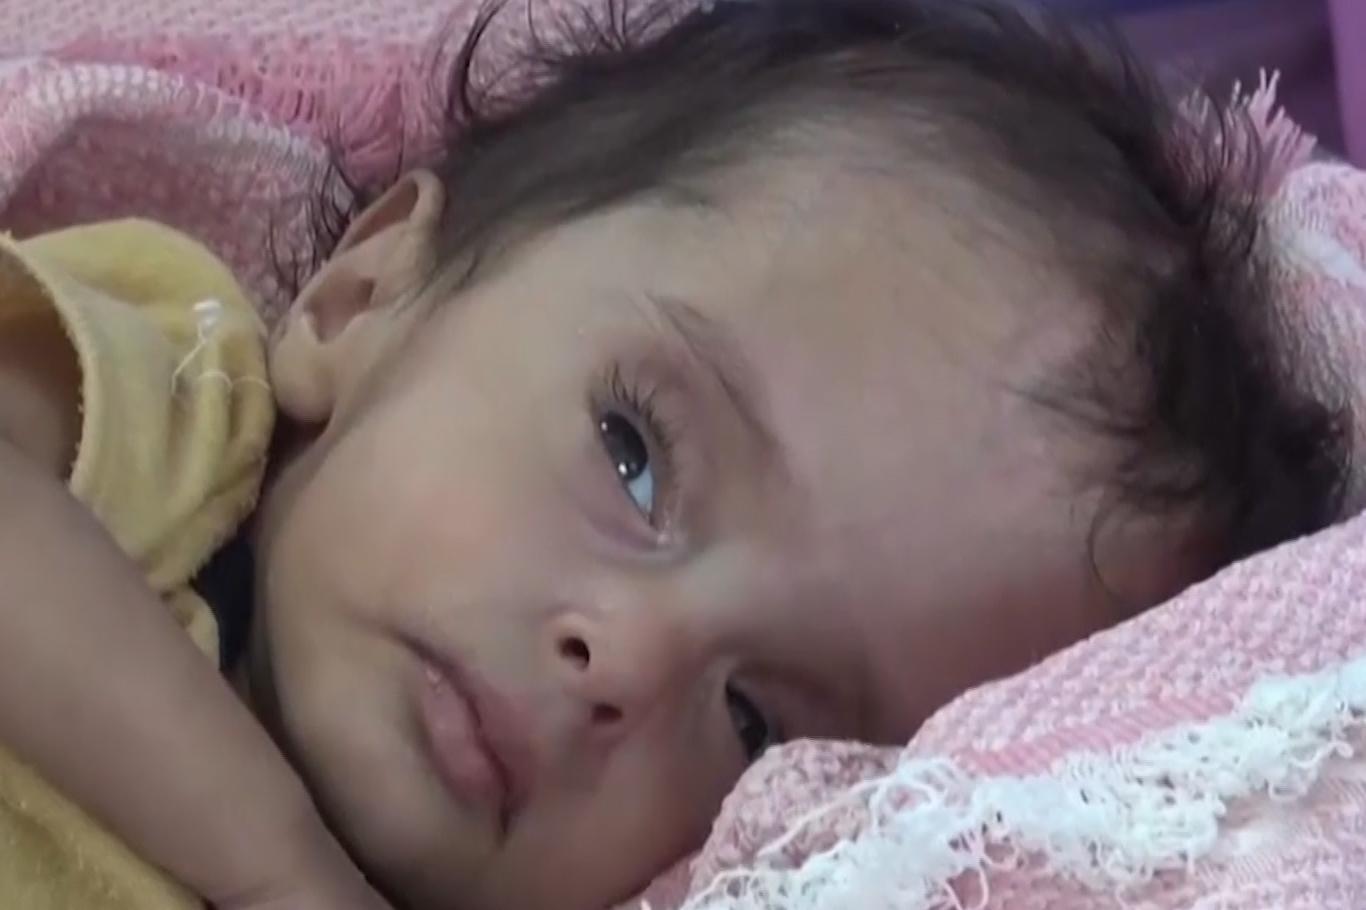 Yemen crisis is mostly affecting children